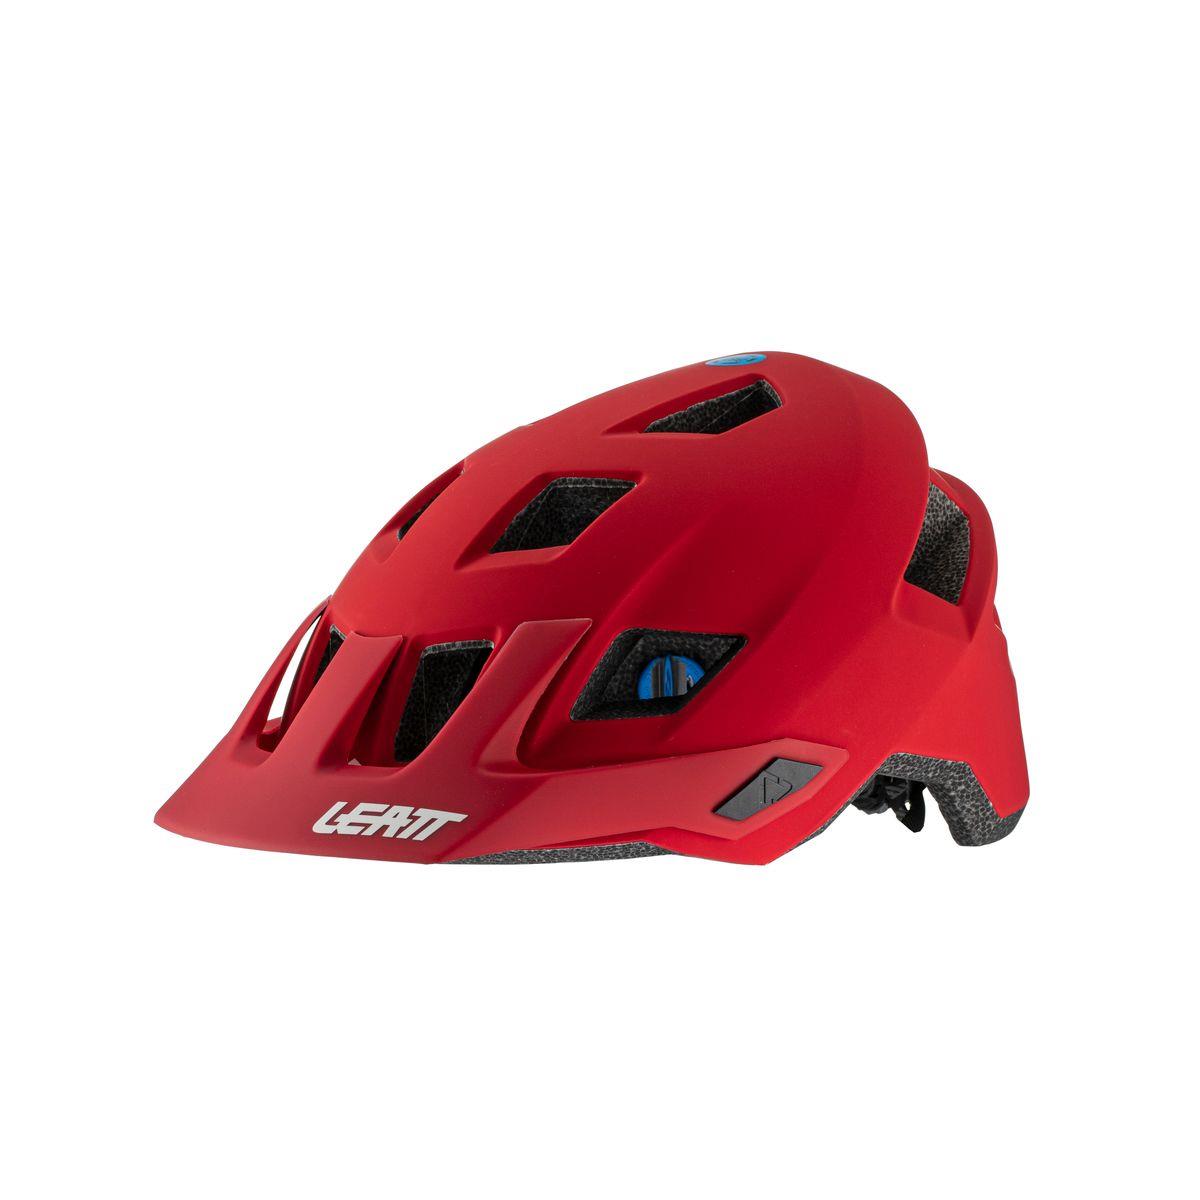 Helmet MTB 1.0 Turbine Technology Red Size M (55-59cm)